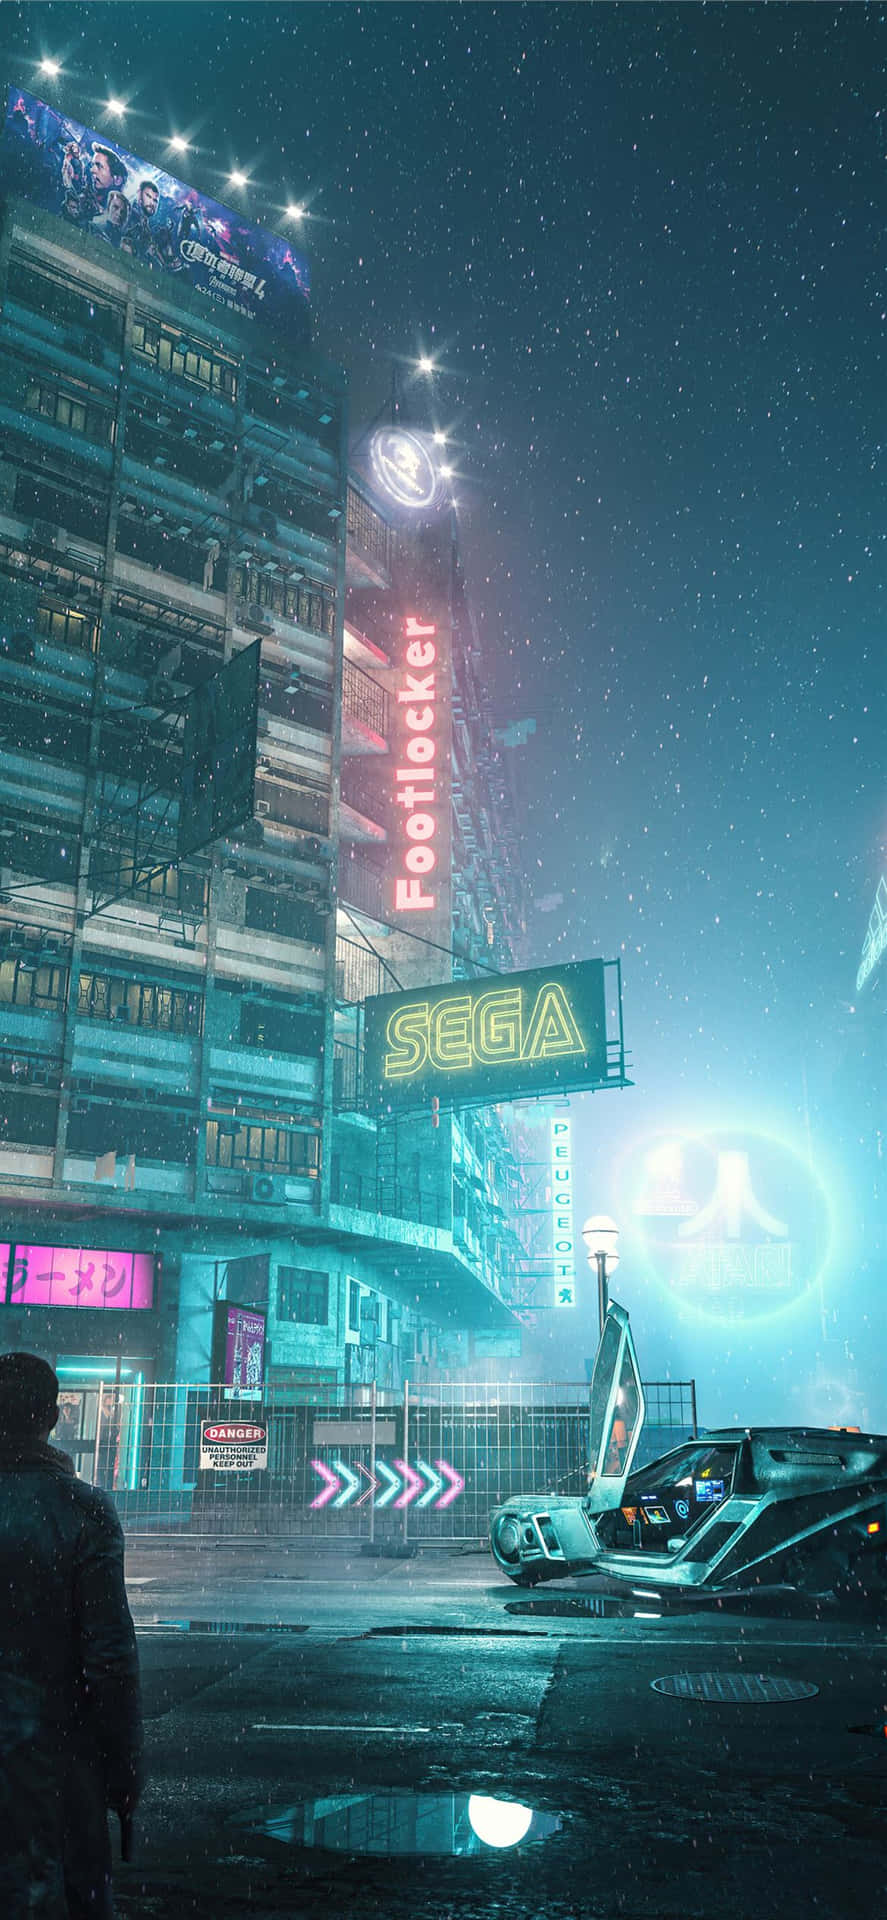 Cyberpunk By - en by med en fremtidig by skyskraber i en dystopisk neon landskab Wallpaper